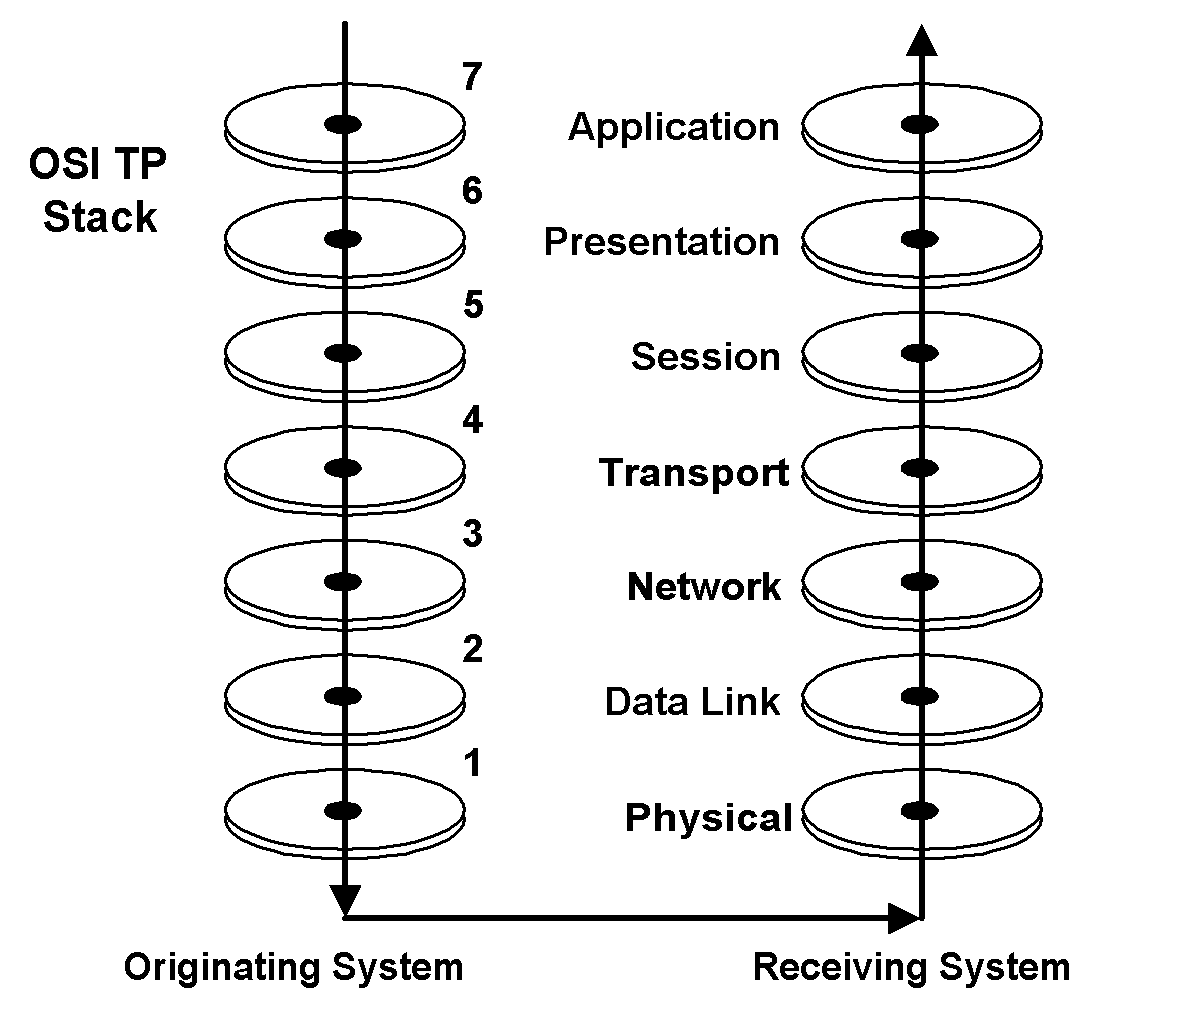 osi reference model